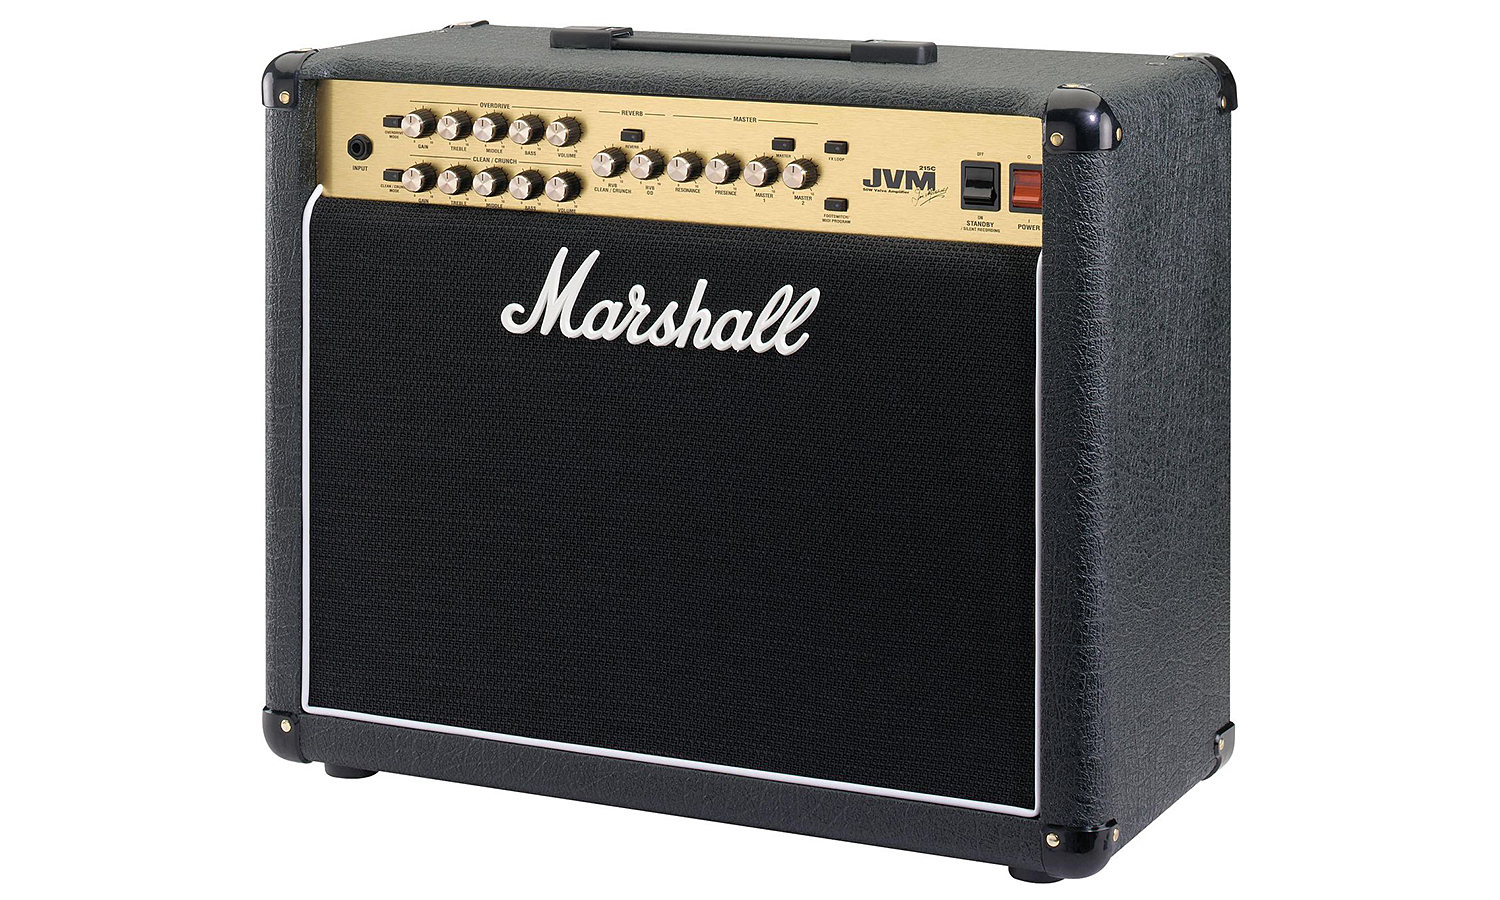 Marshall Jvm215c 50w 1x12 - Electric guitar combo amp - Variation 1